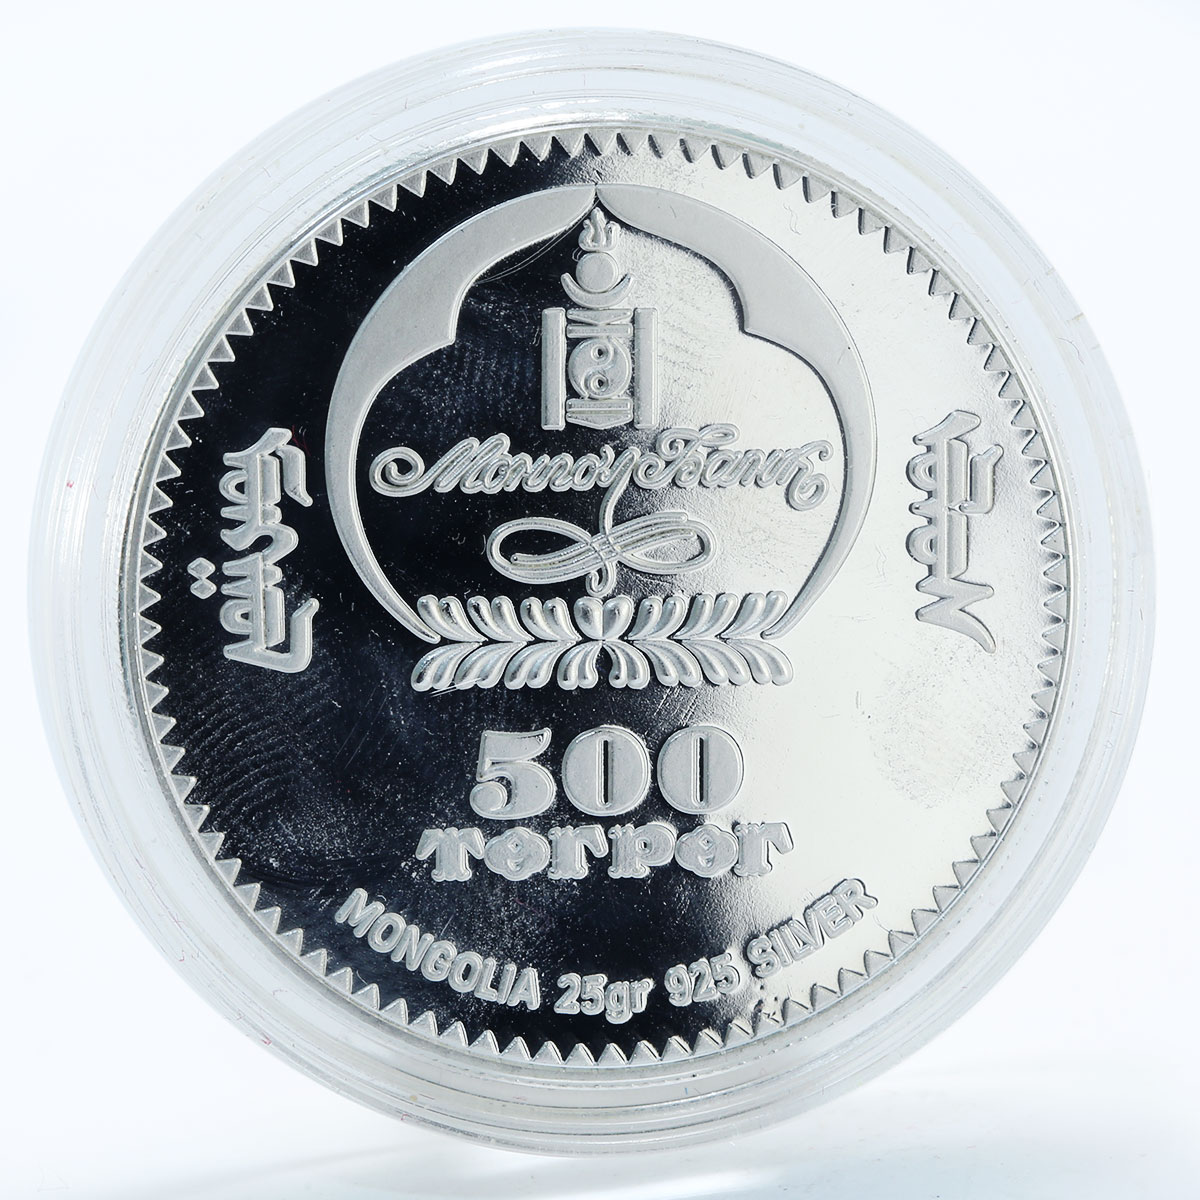 Mongolia 500 togrog Taj Mahal proof silver coin 2008